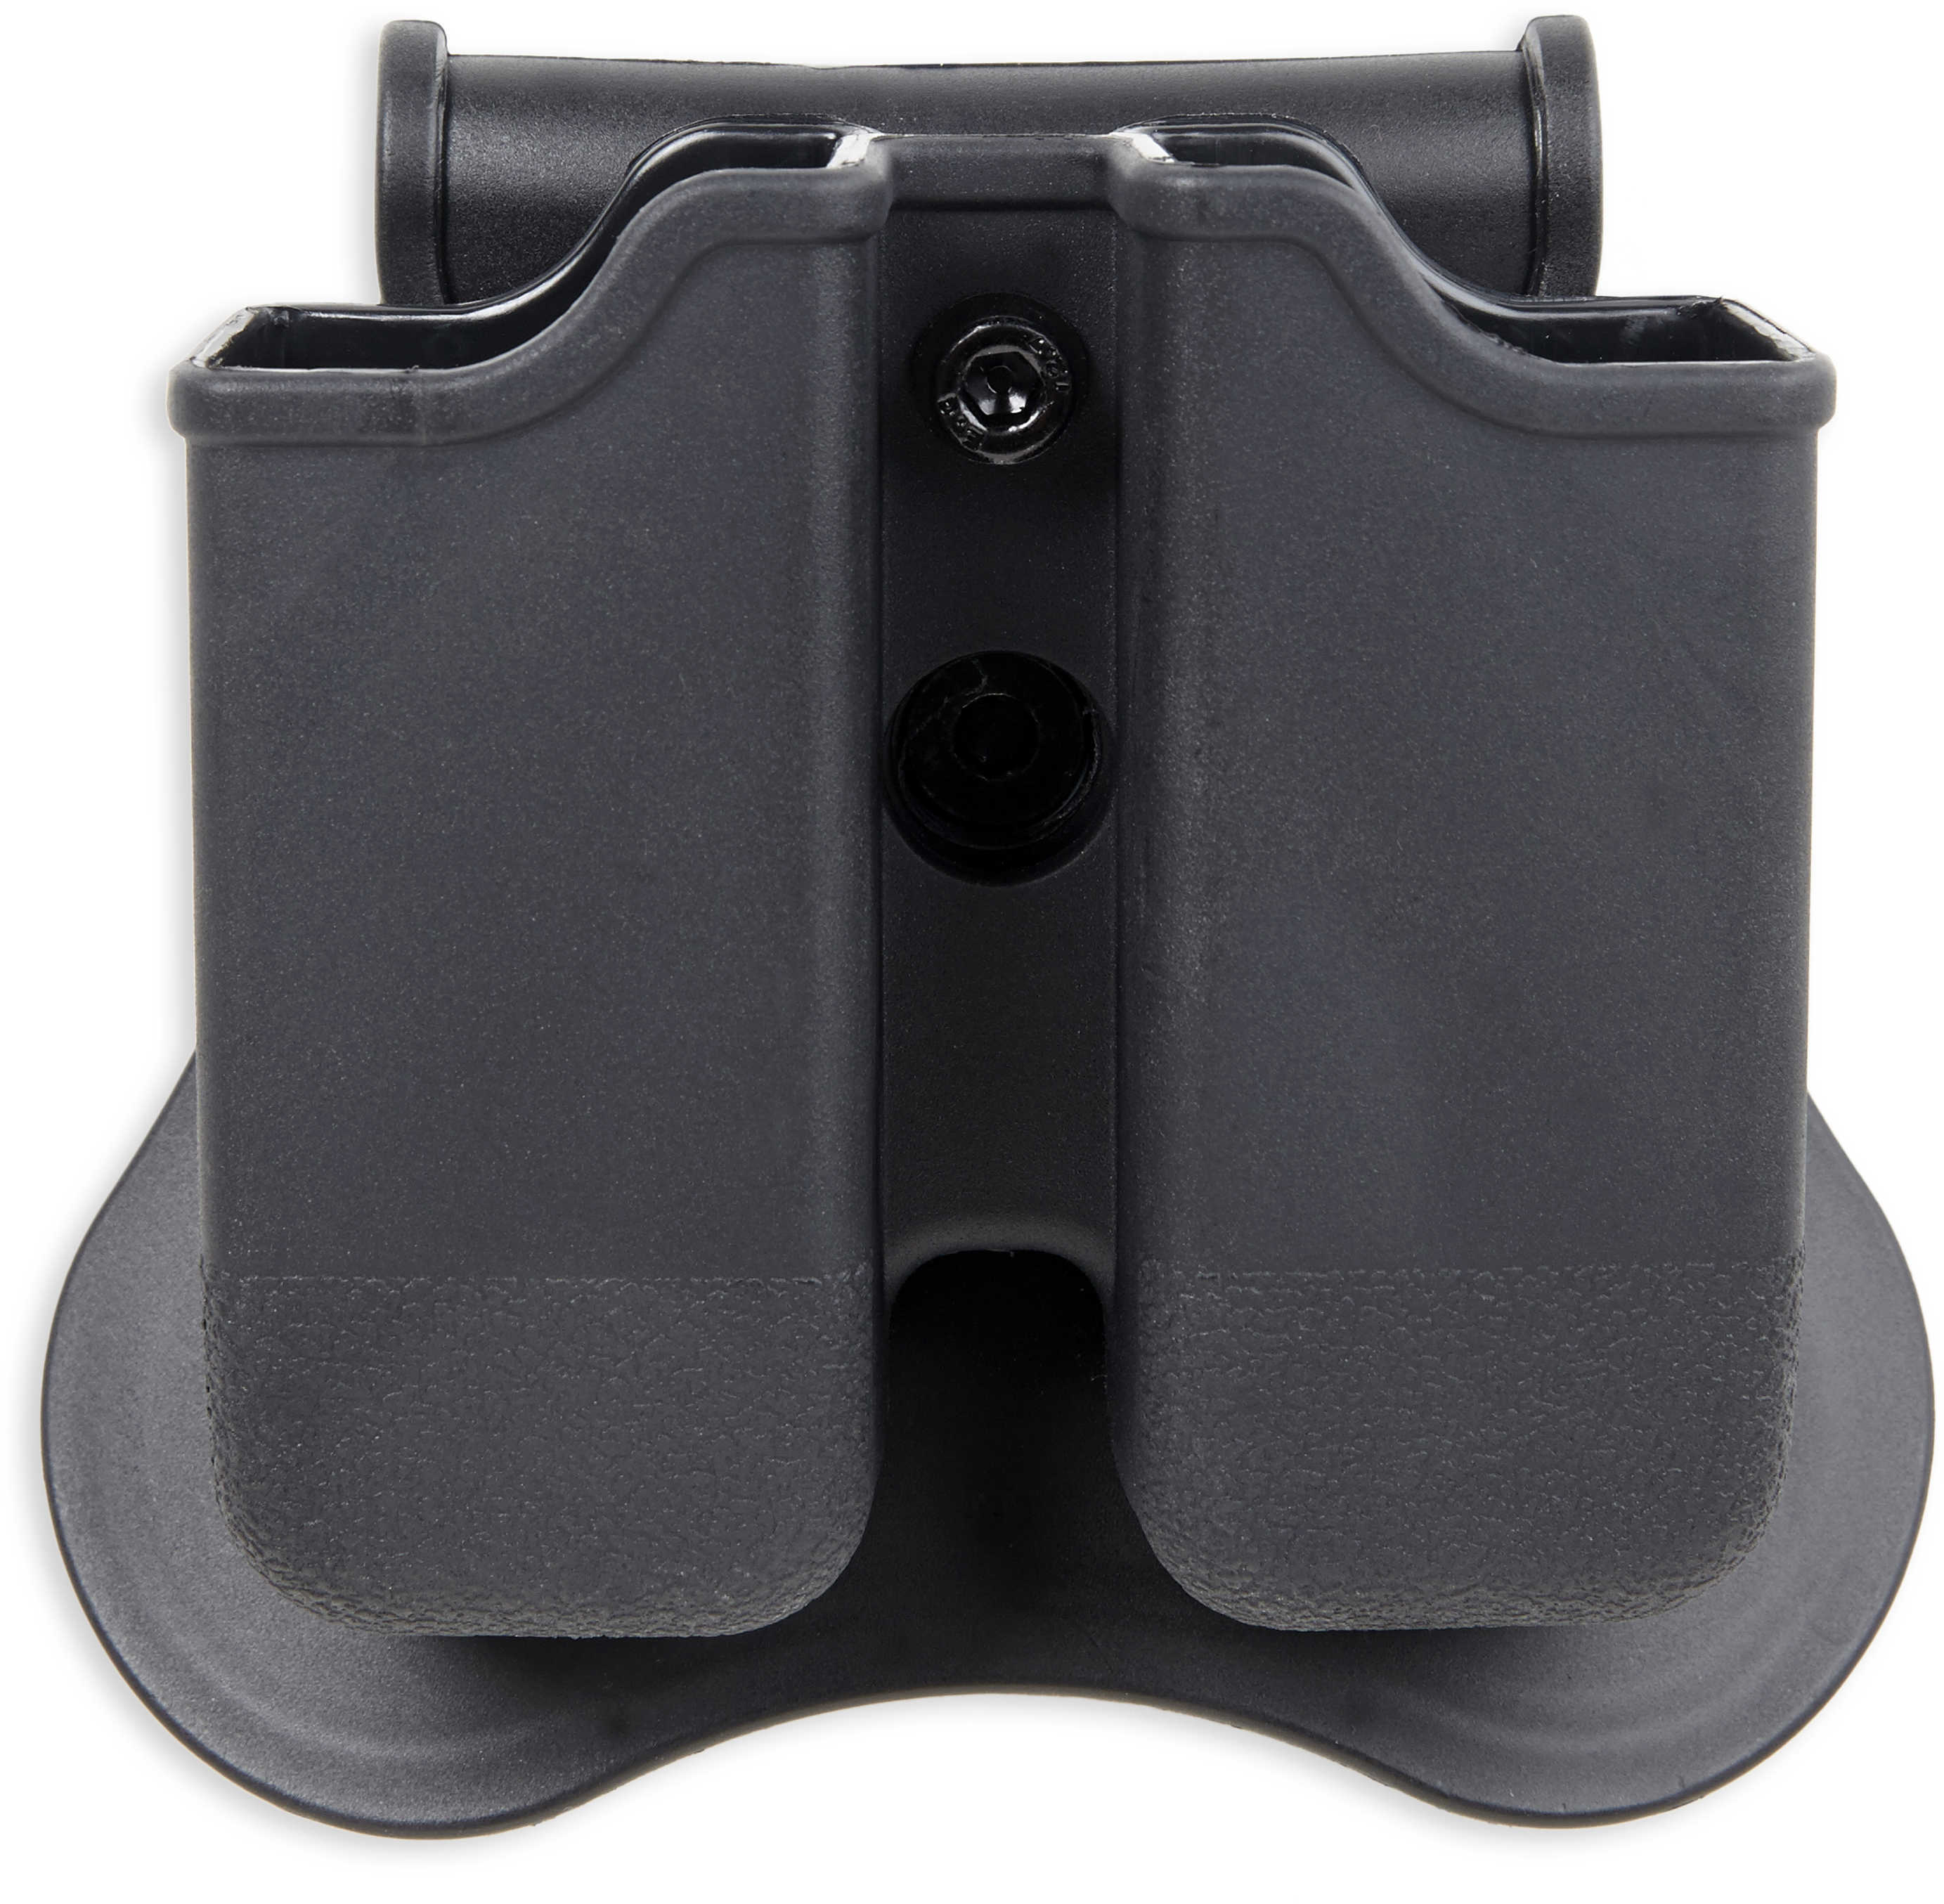 Polymer Mag Holder w/Paddle - ambi Fits Glock 17-19-22-23-26-27-31-32-33-34